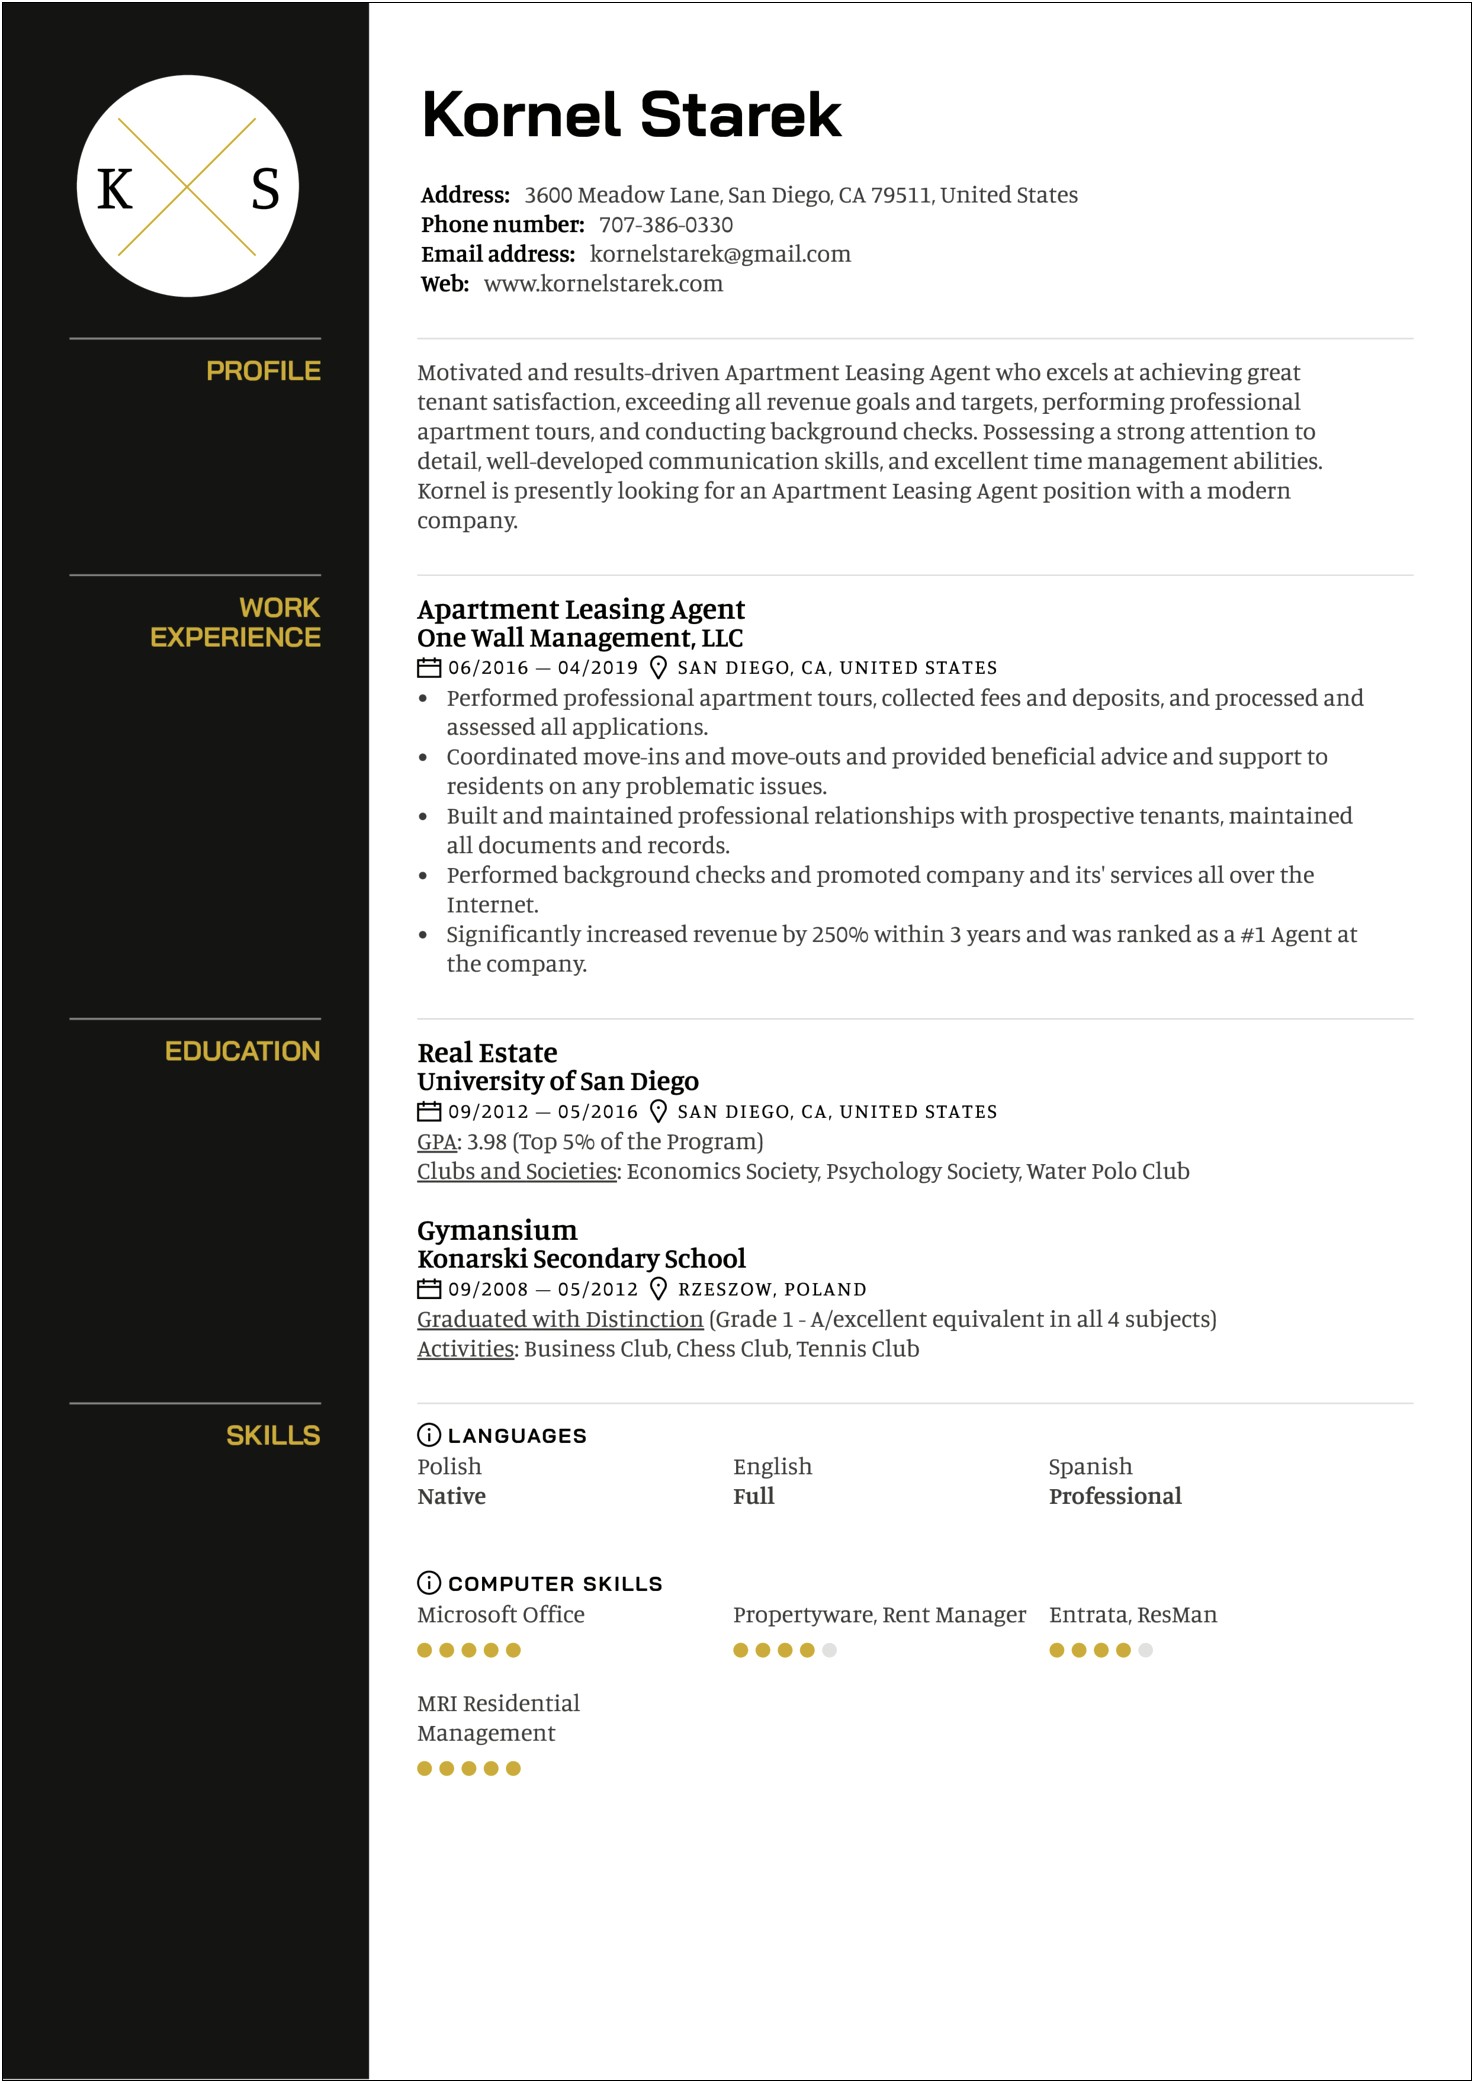 Apartment Leasing Agent Job Description Resume